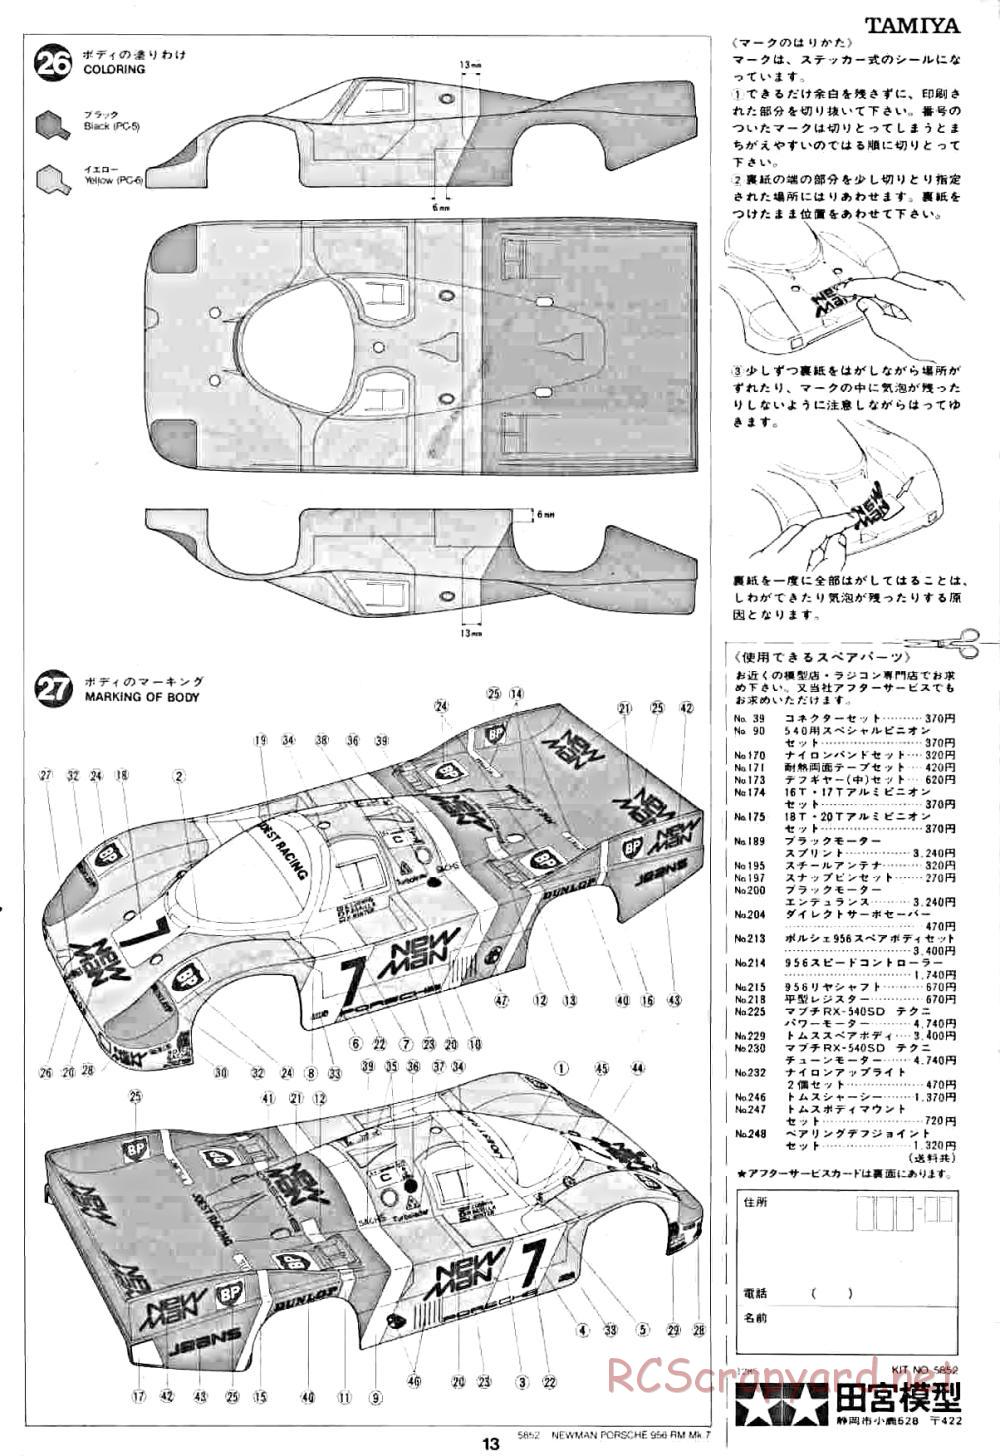 Tamiya - Newman Prsch 956 - RM MK.7 - 58052 - Manual - Page 13